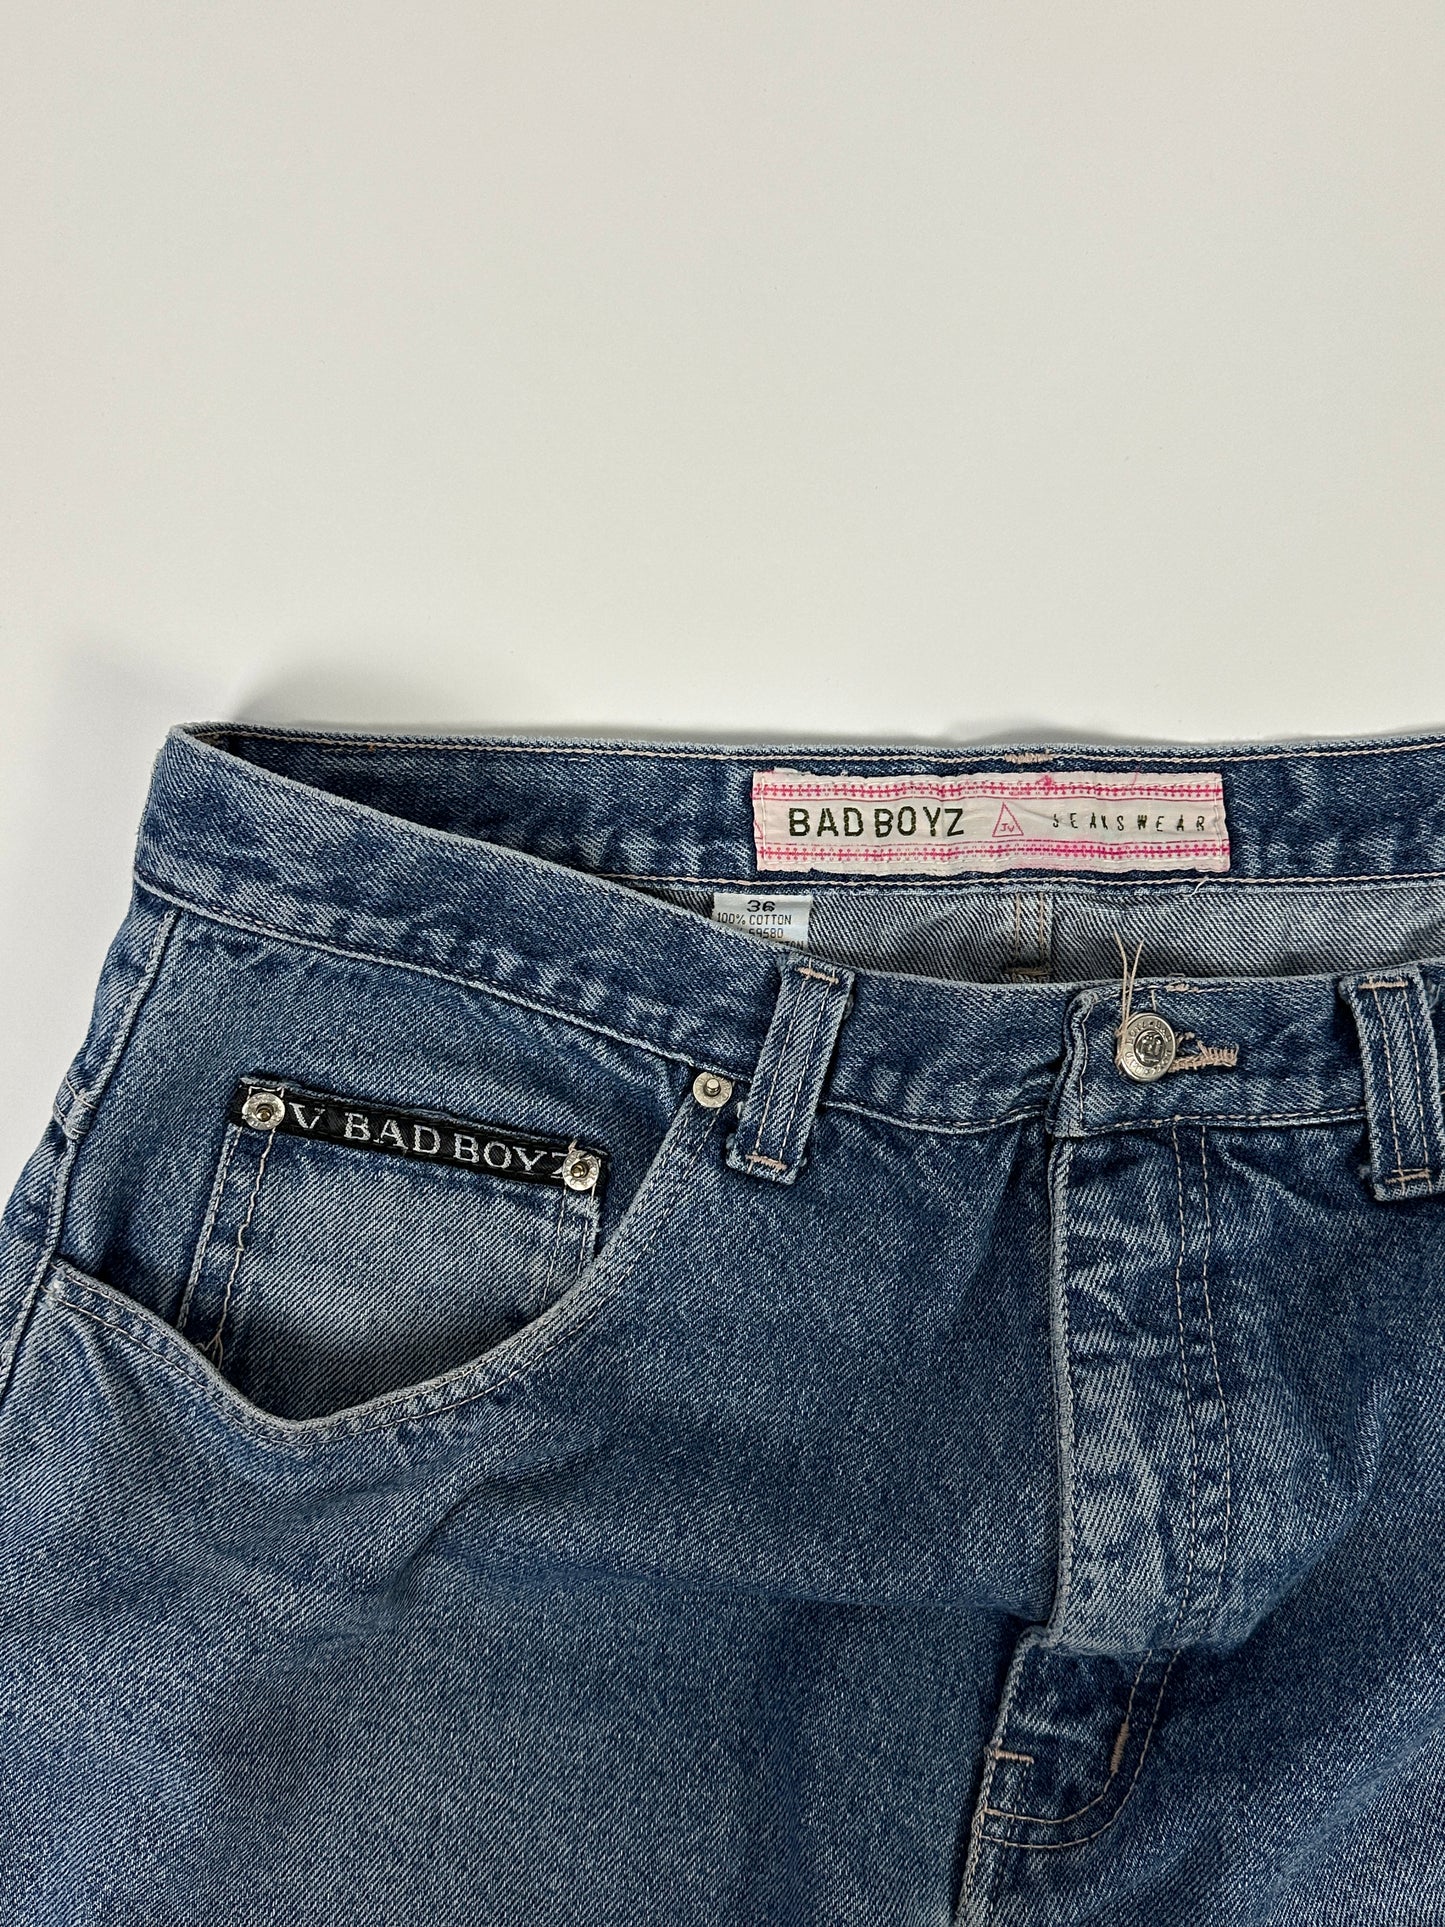 Bad Boyz Vintage Denim Shorts - 36